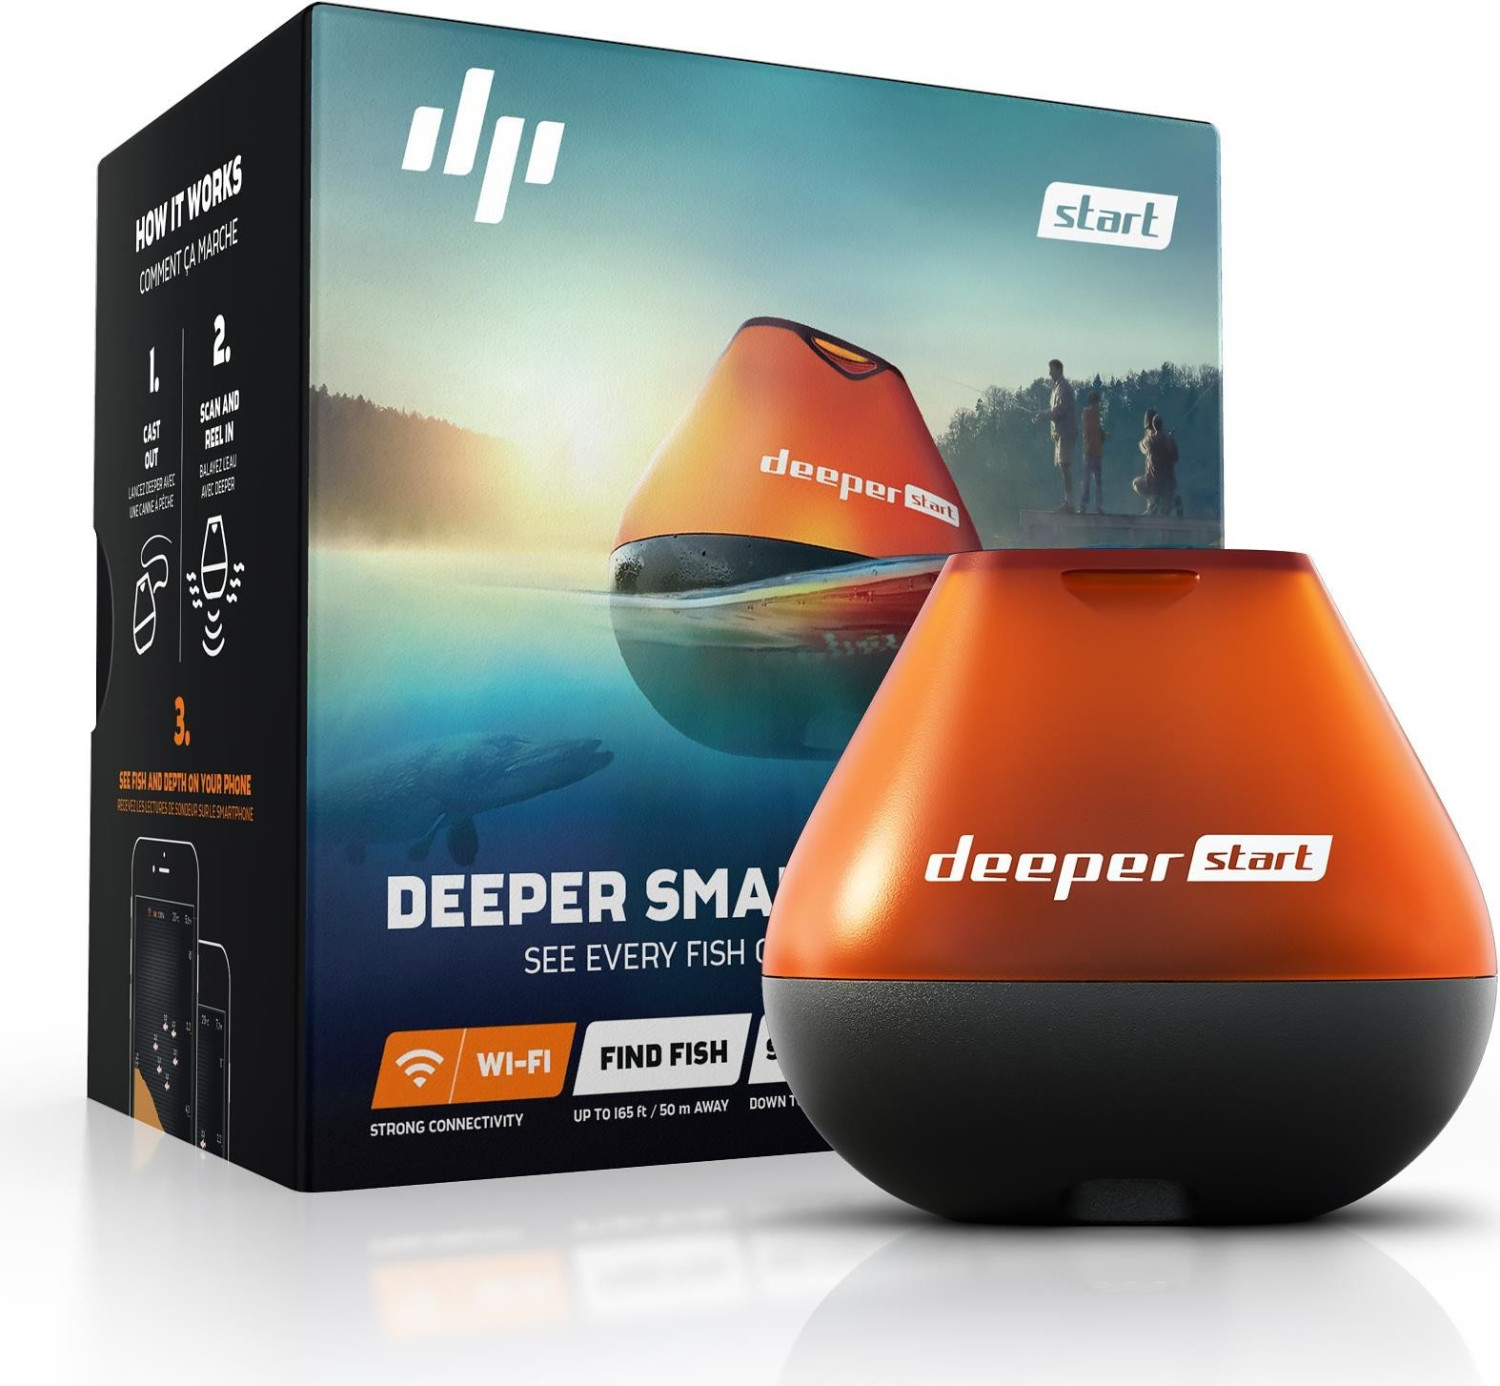 Buy Deeper Sonar Fishfinder Start from £91.49 (Today) – Best Deals on